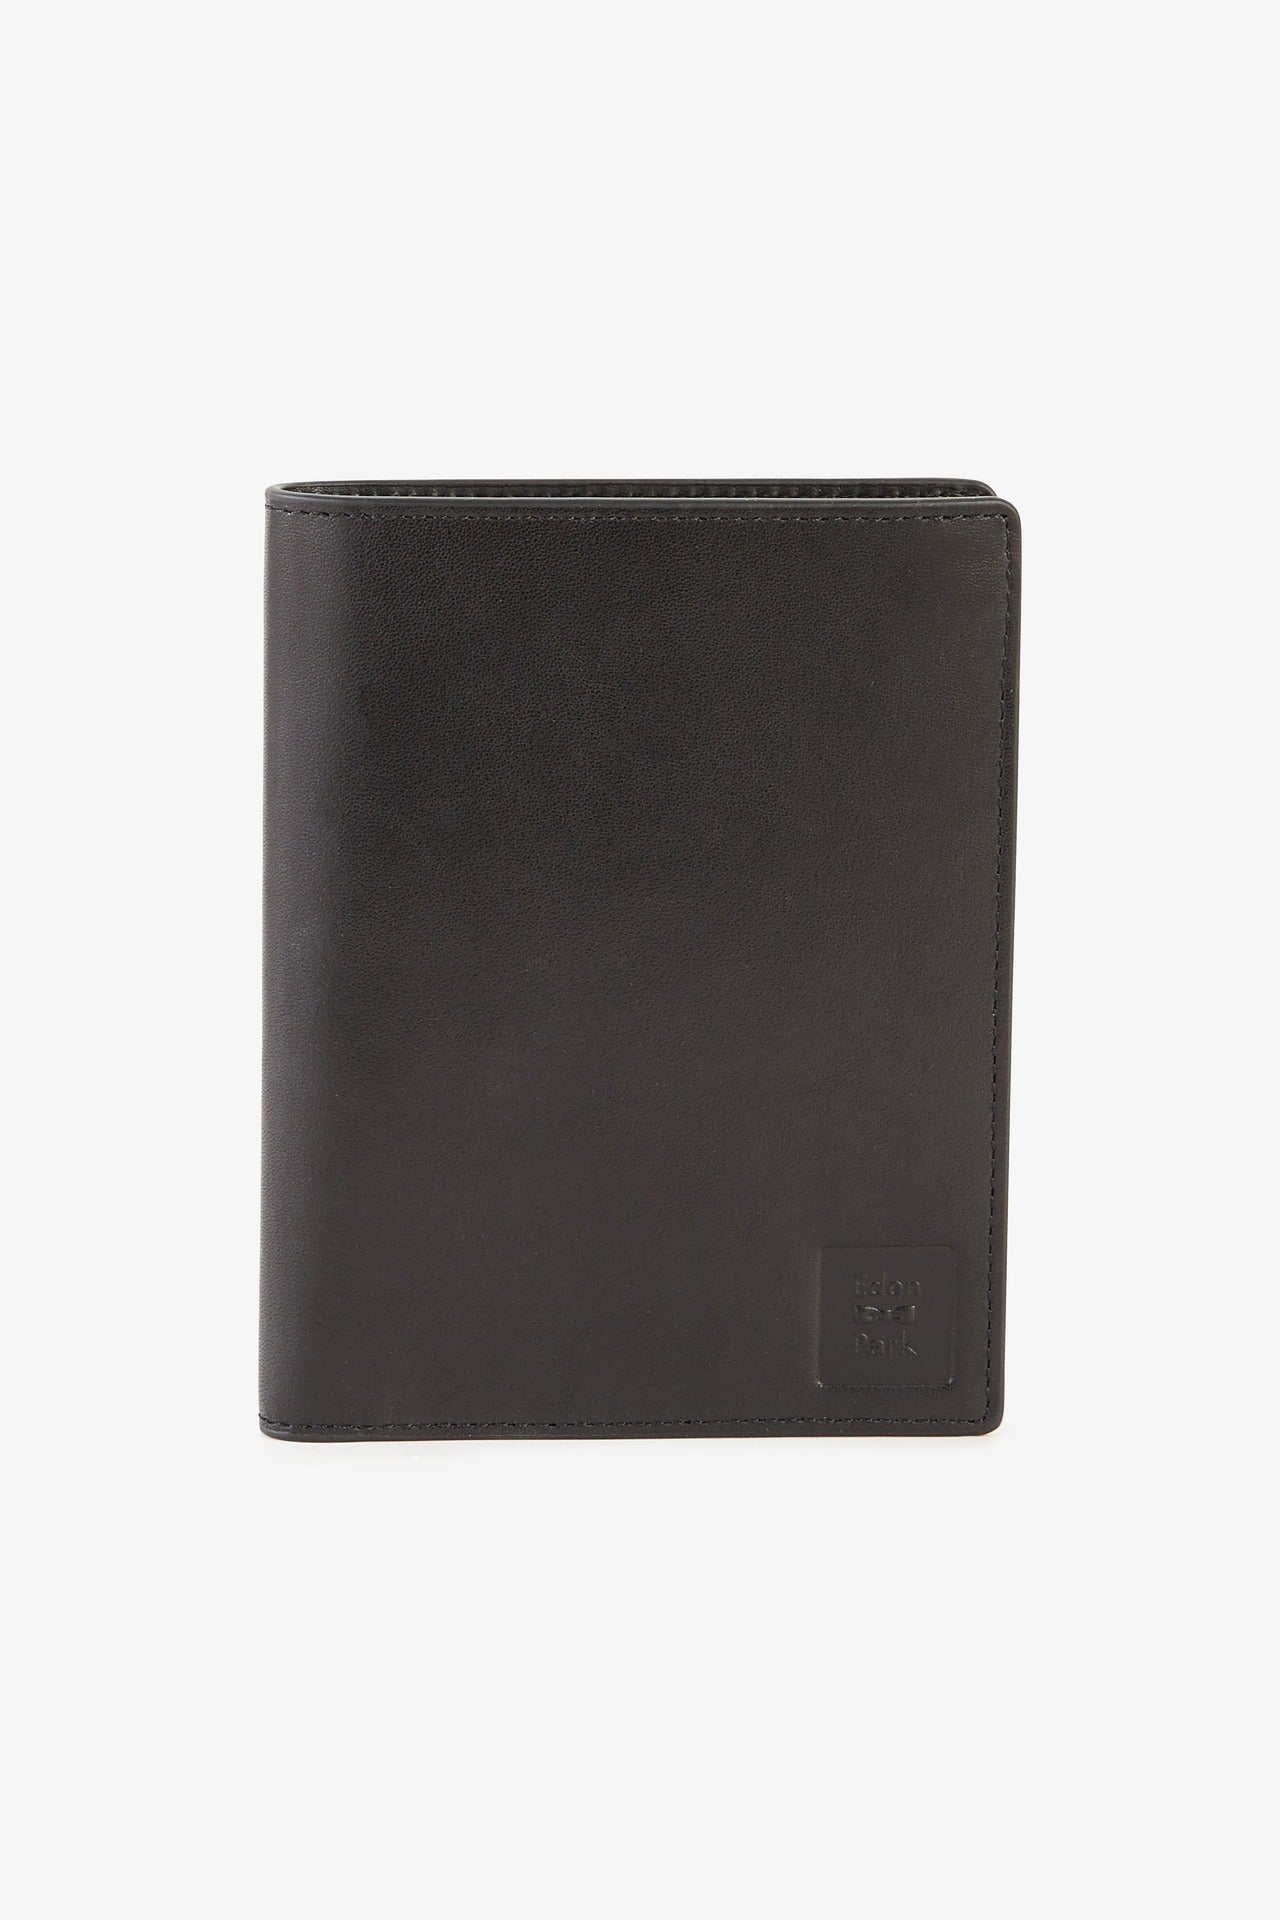 Portefeuille passeport en cuir noir - Image 1